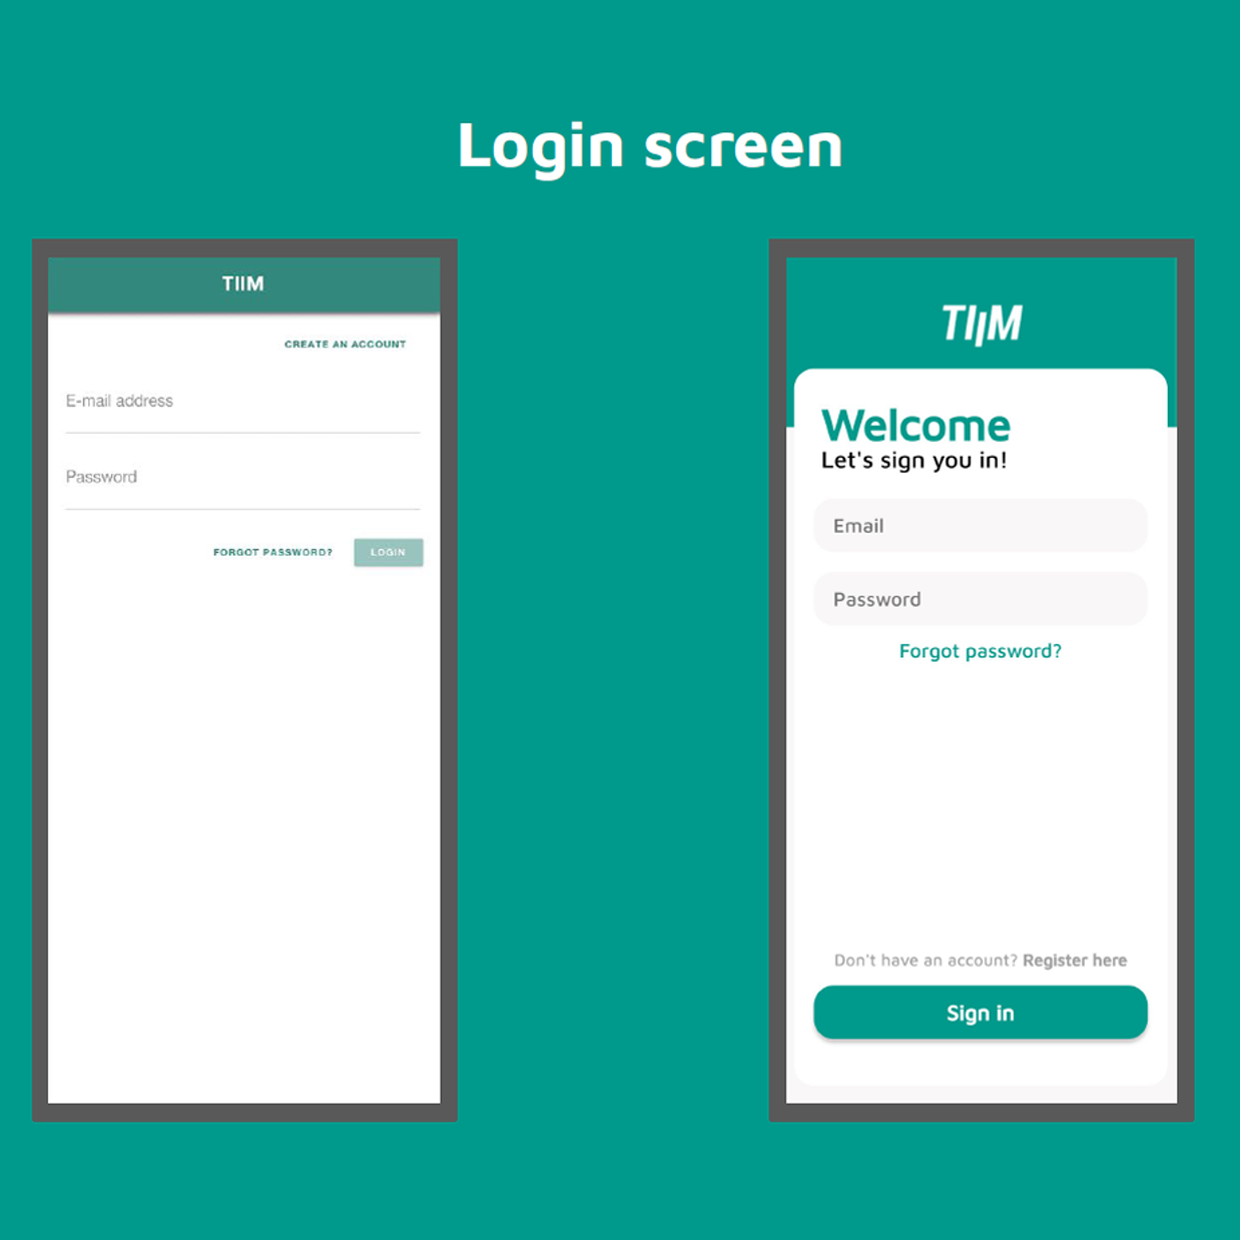 TIIM log-in screen old versus new